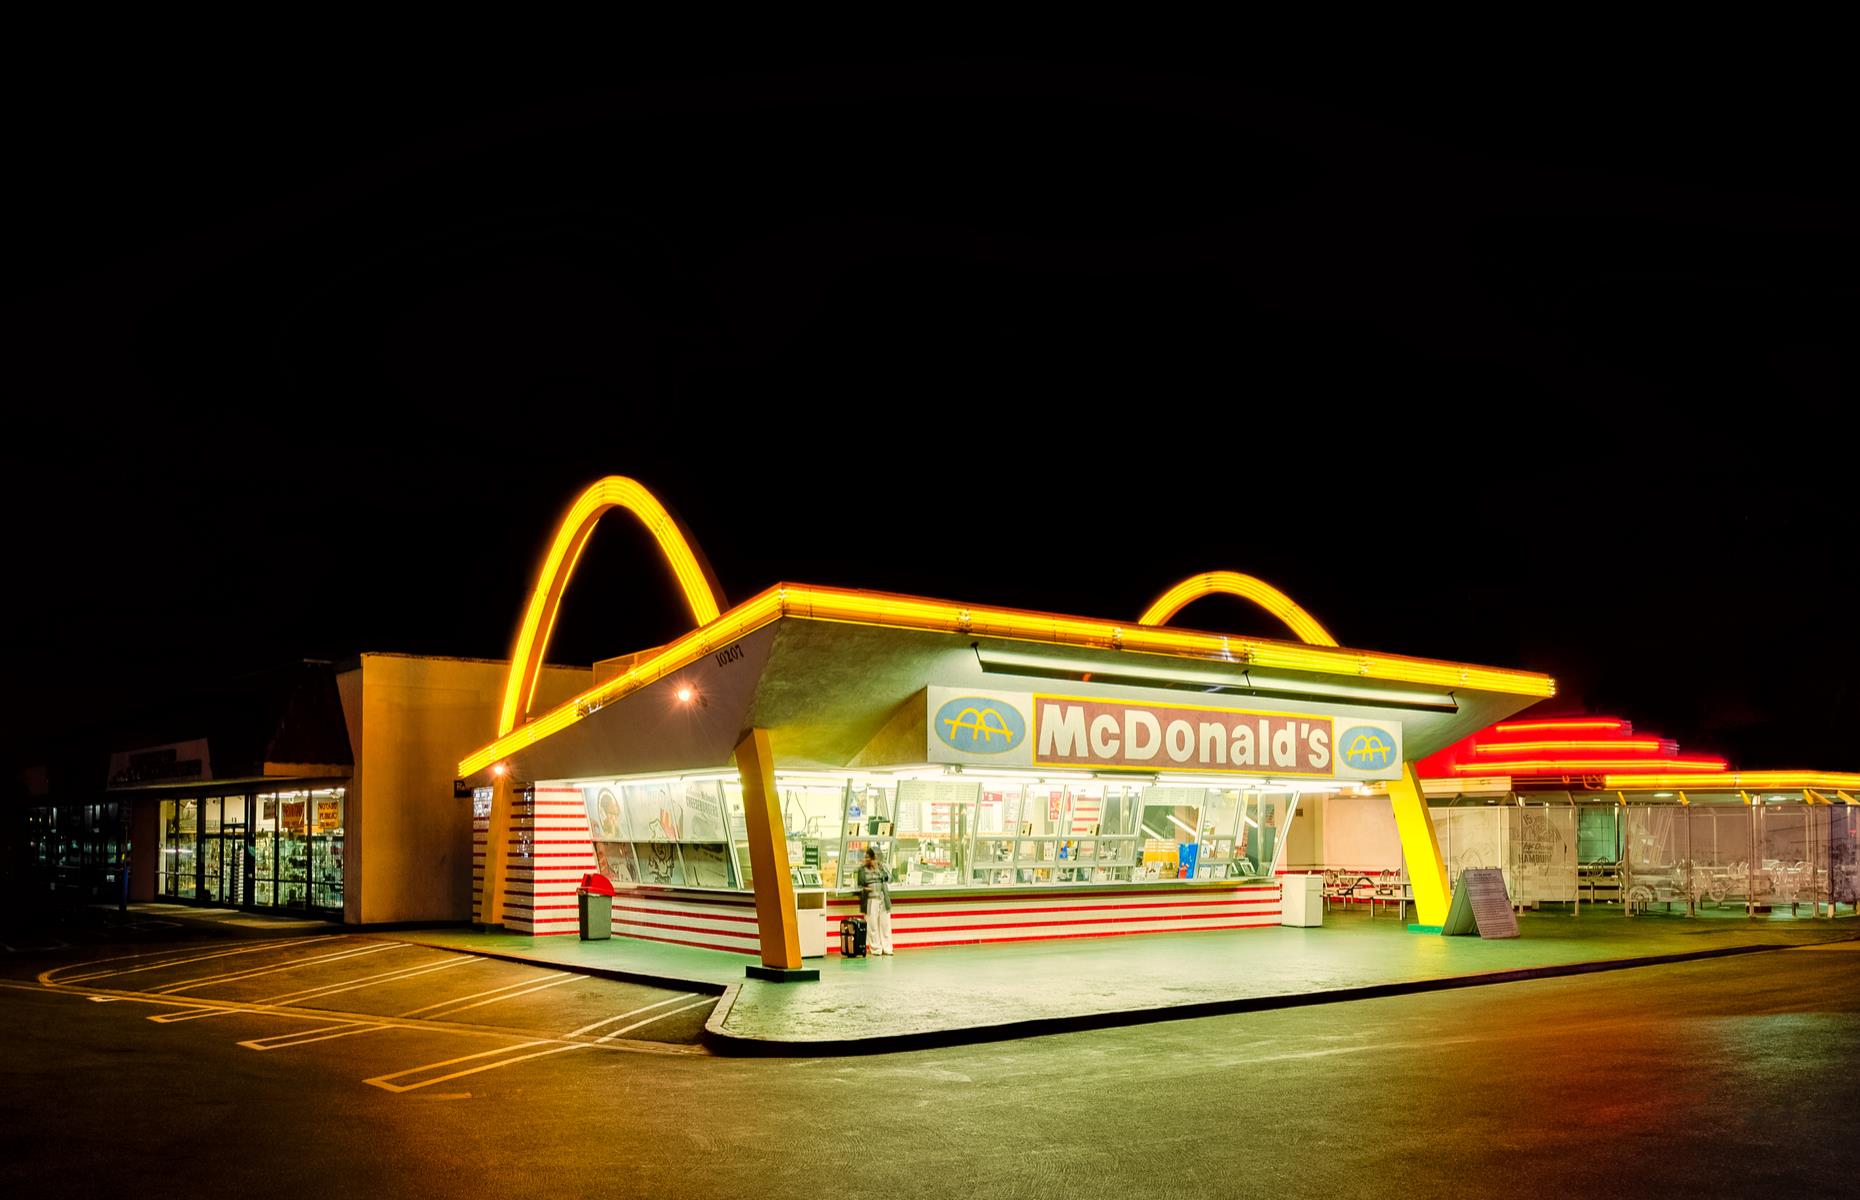 The McDonald brothers – McDonald's